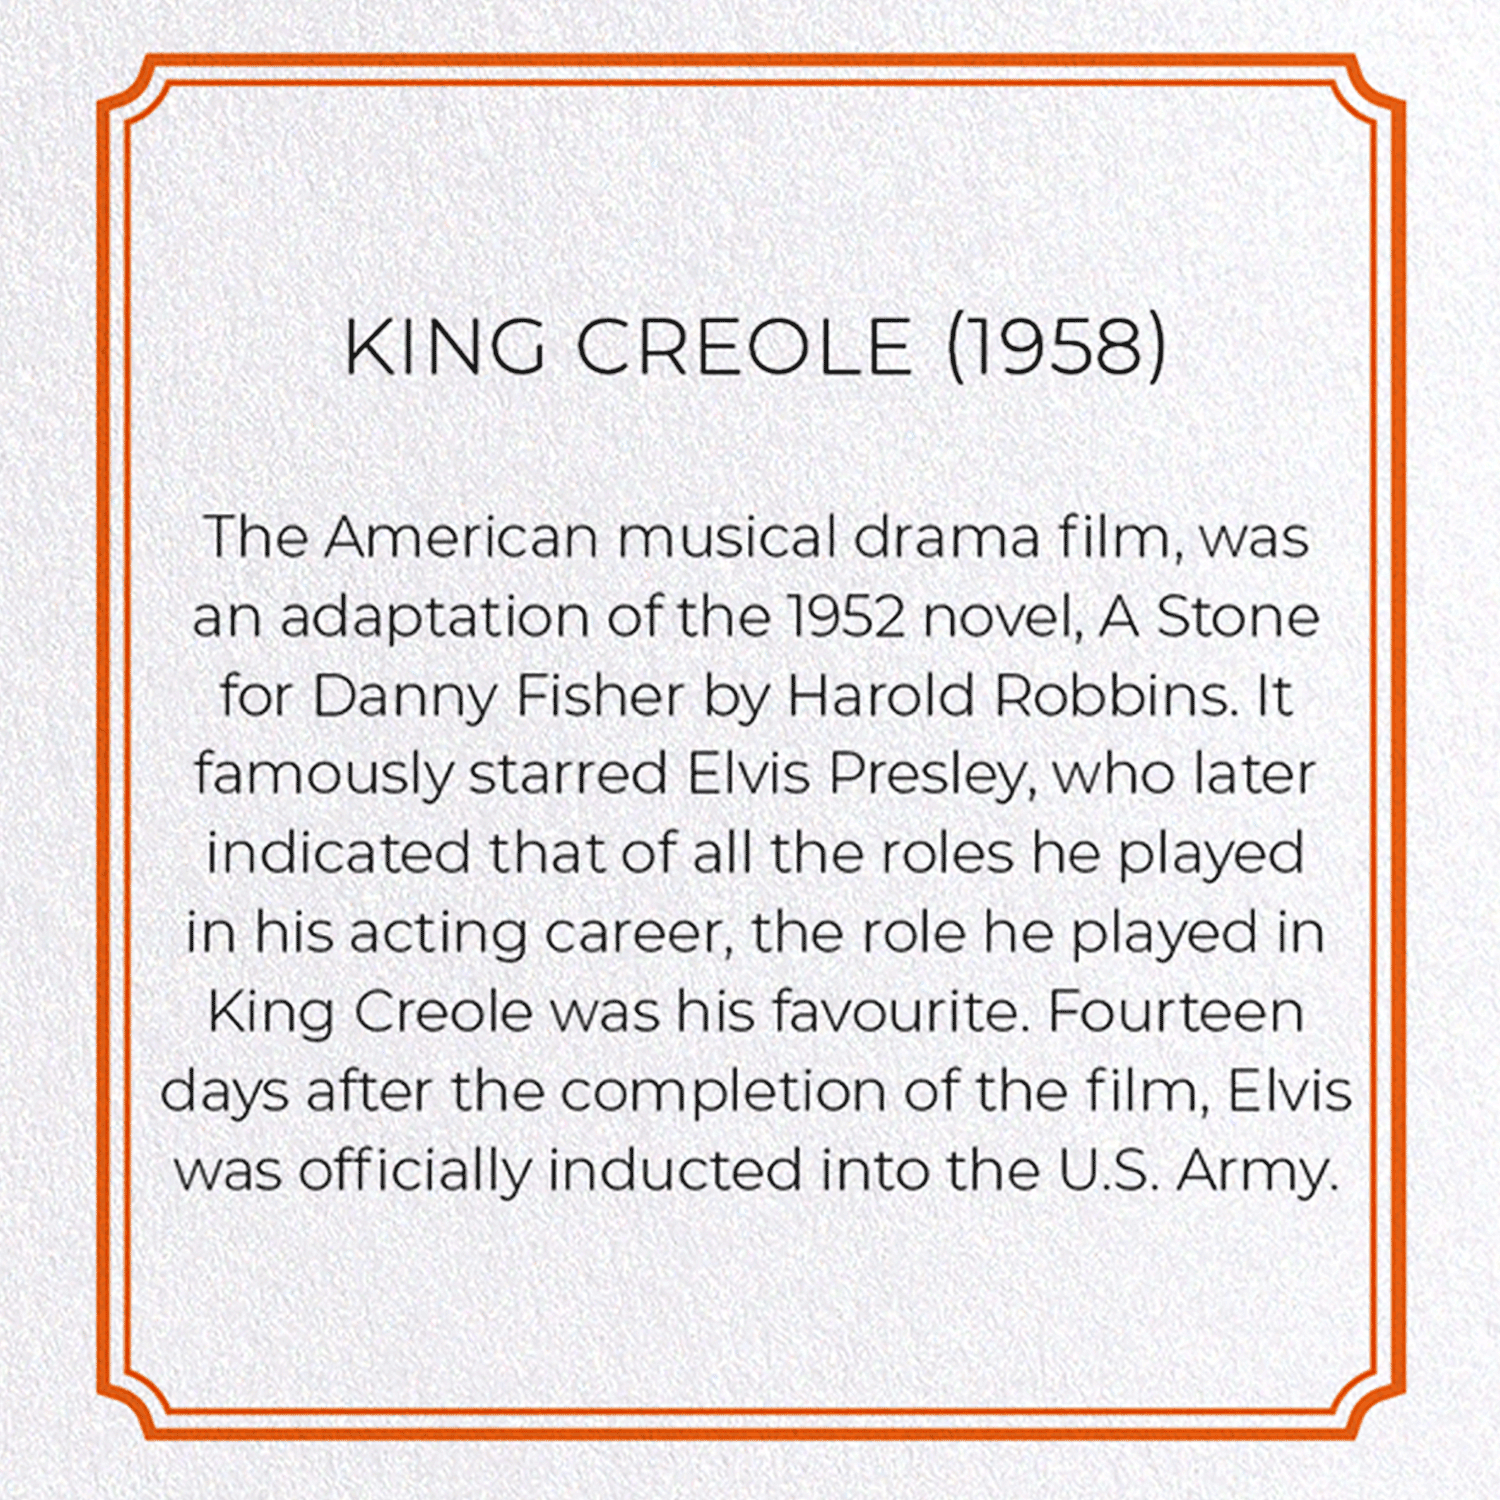 KING CREOLE (1958)